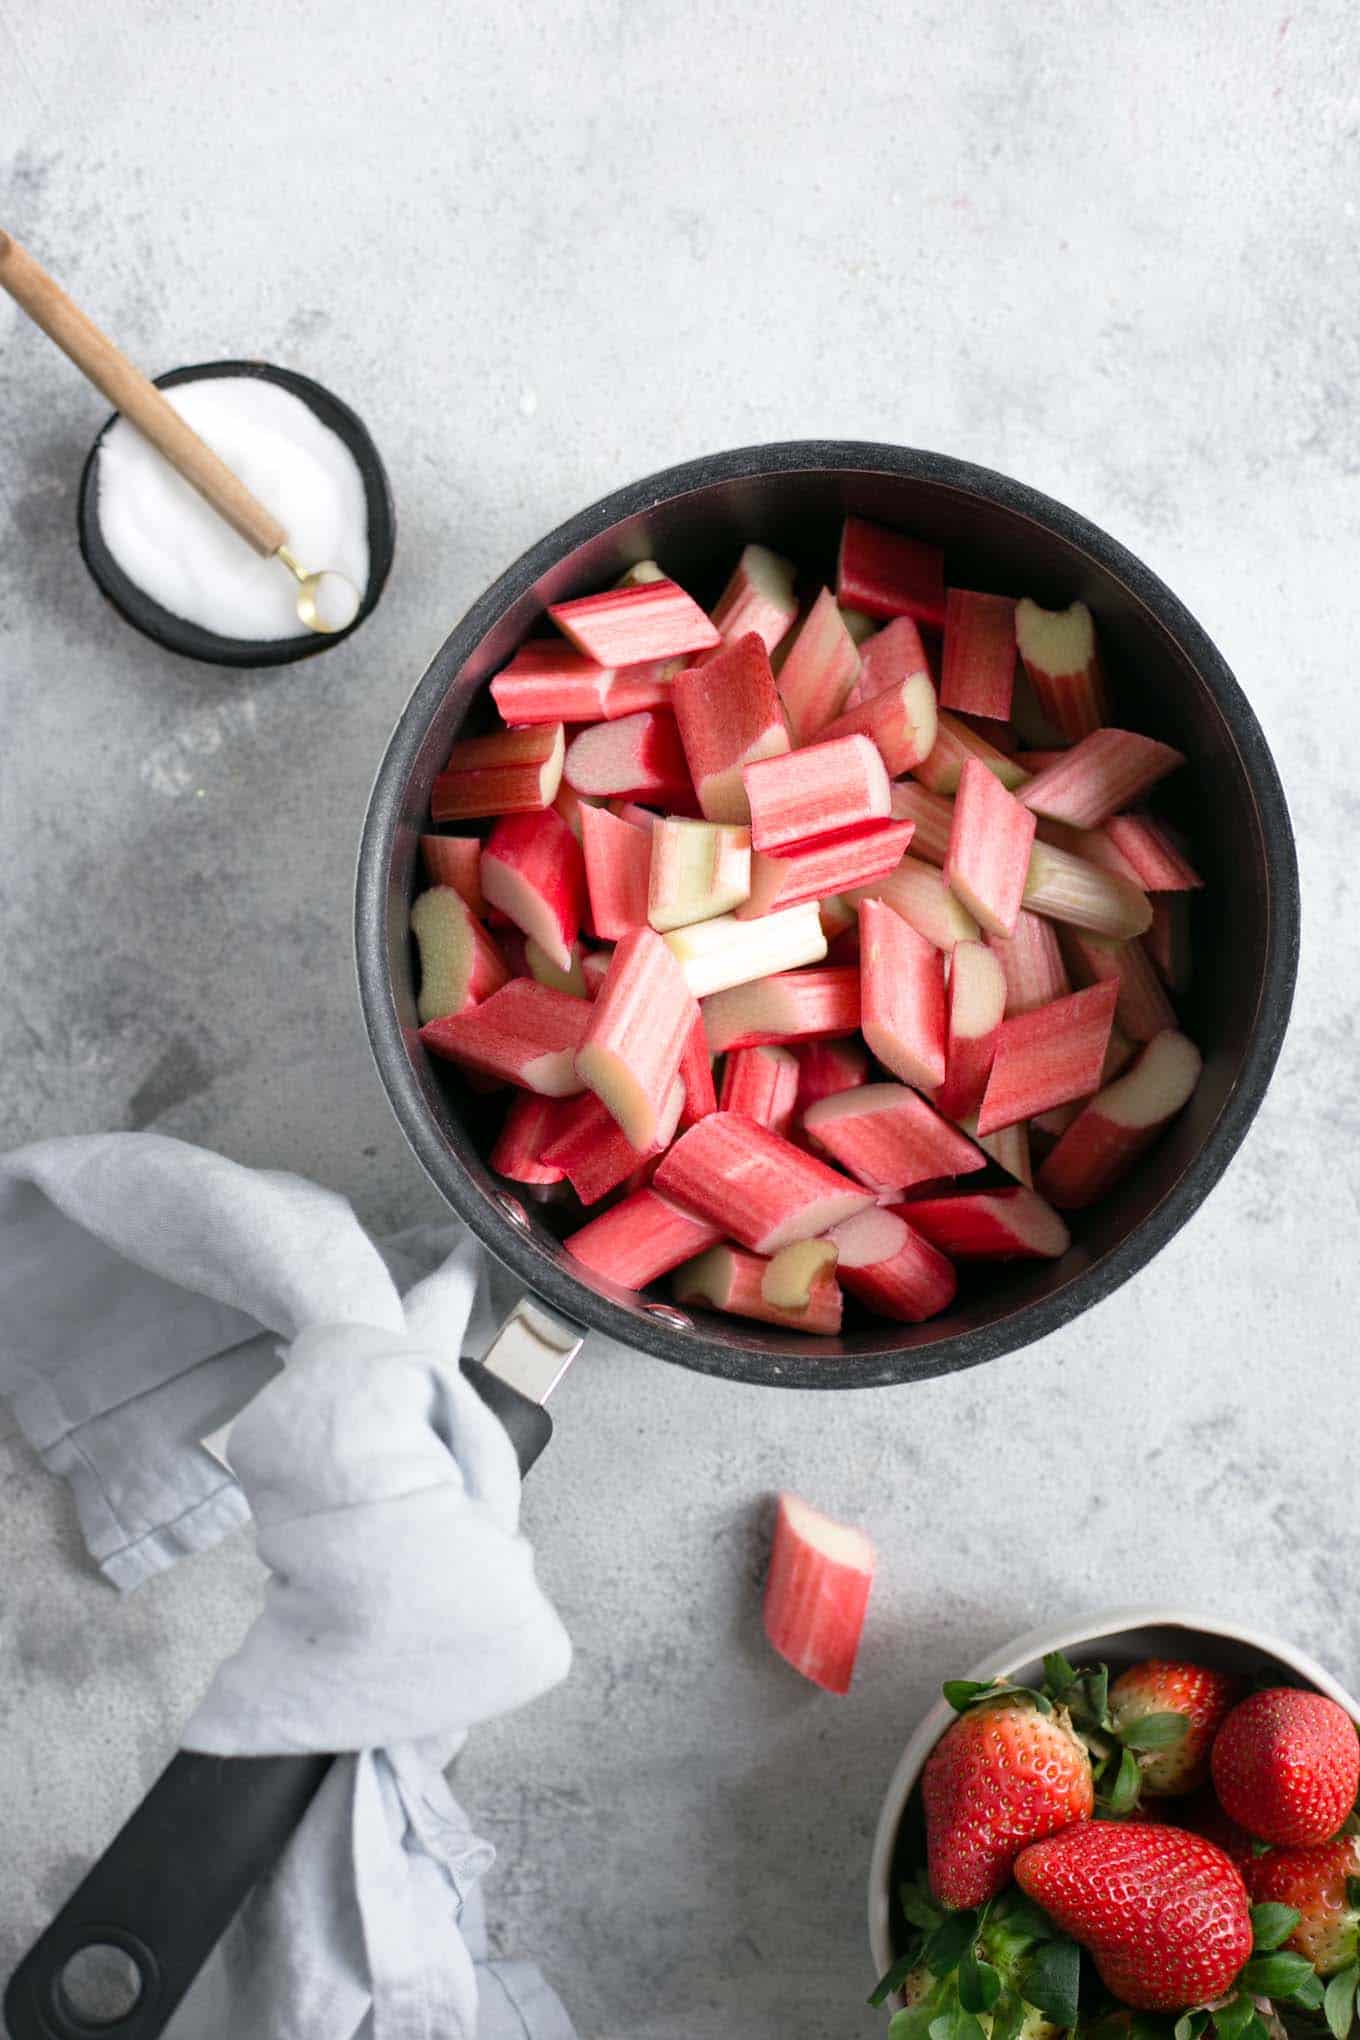 Rhubarb strawberry pie. Easy and tasty recipe for a timeless classic! #rhubarb #vegan #dairyfree | via @annabanana.co